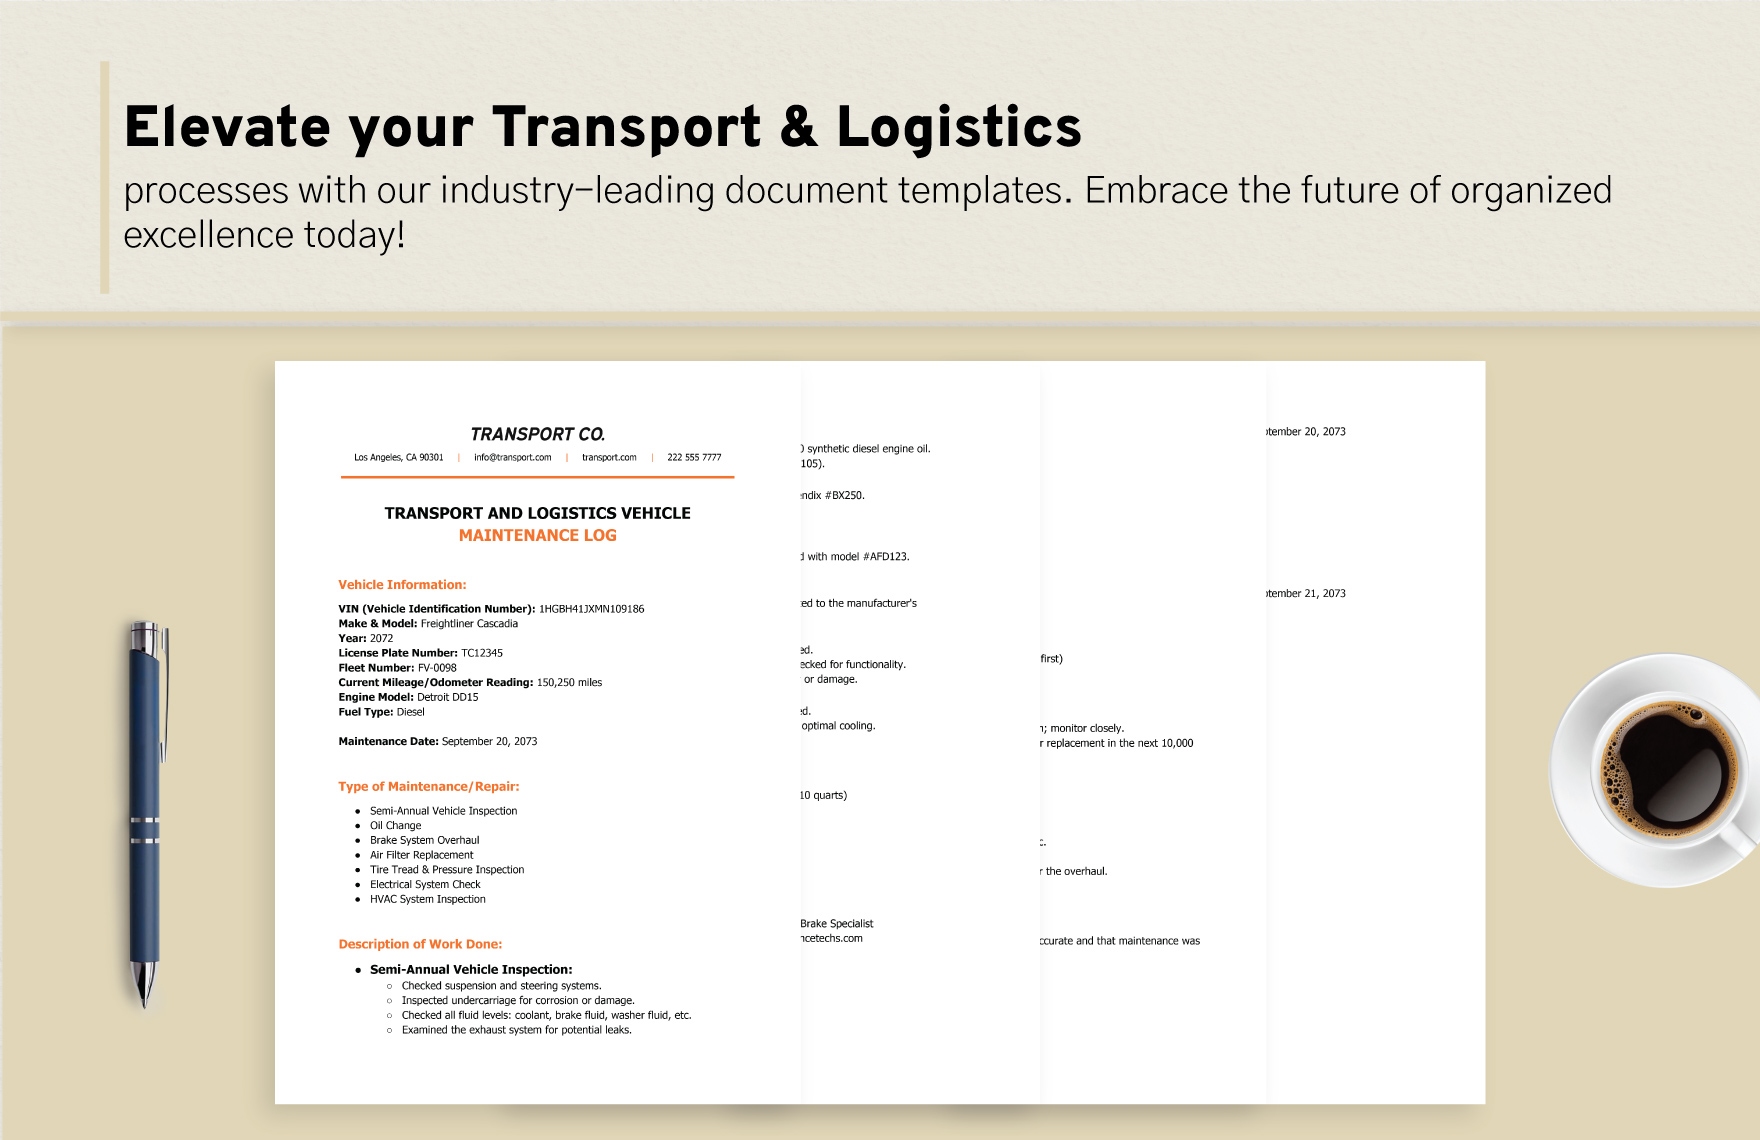 Transport and Logistics Vehicle Maintenance Log Template